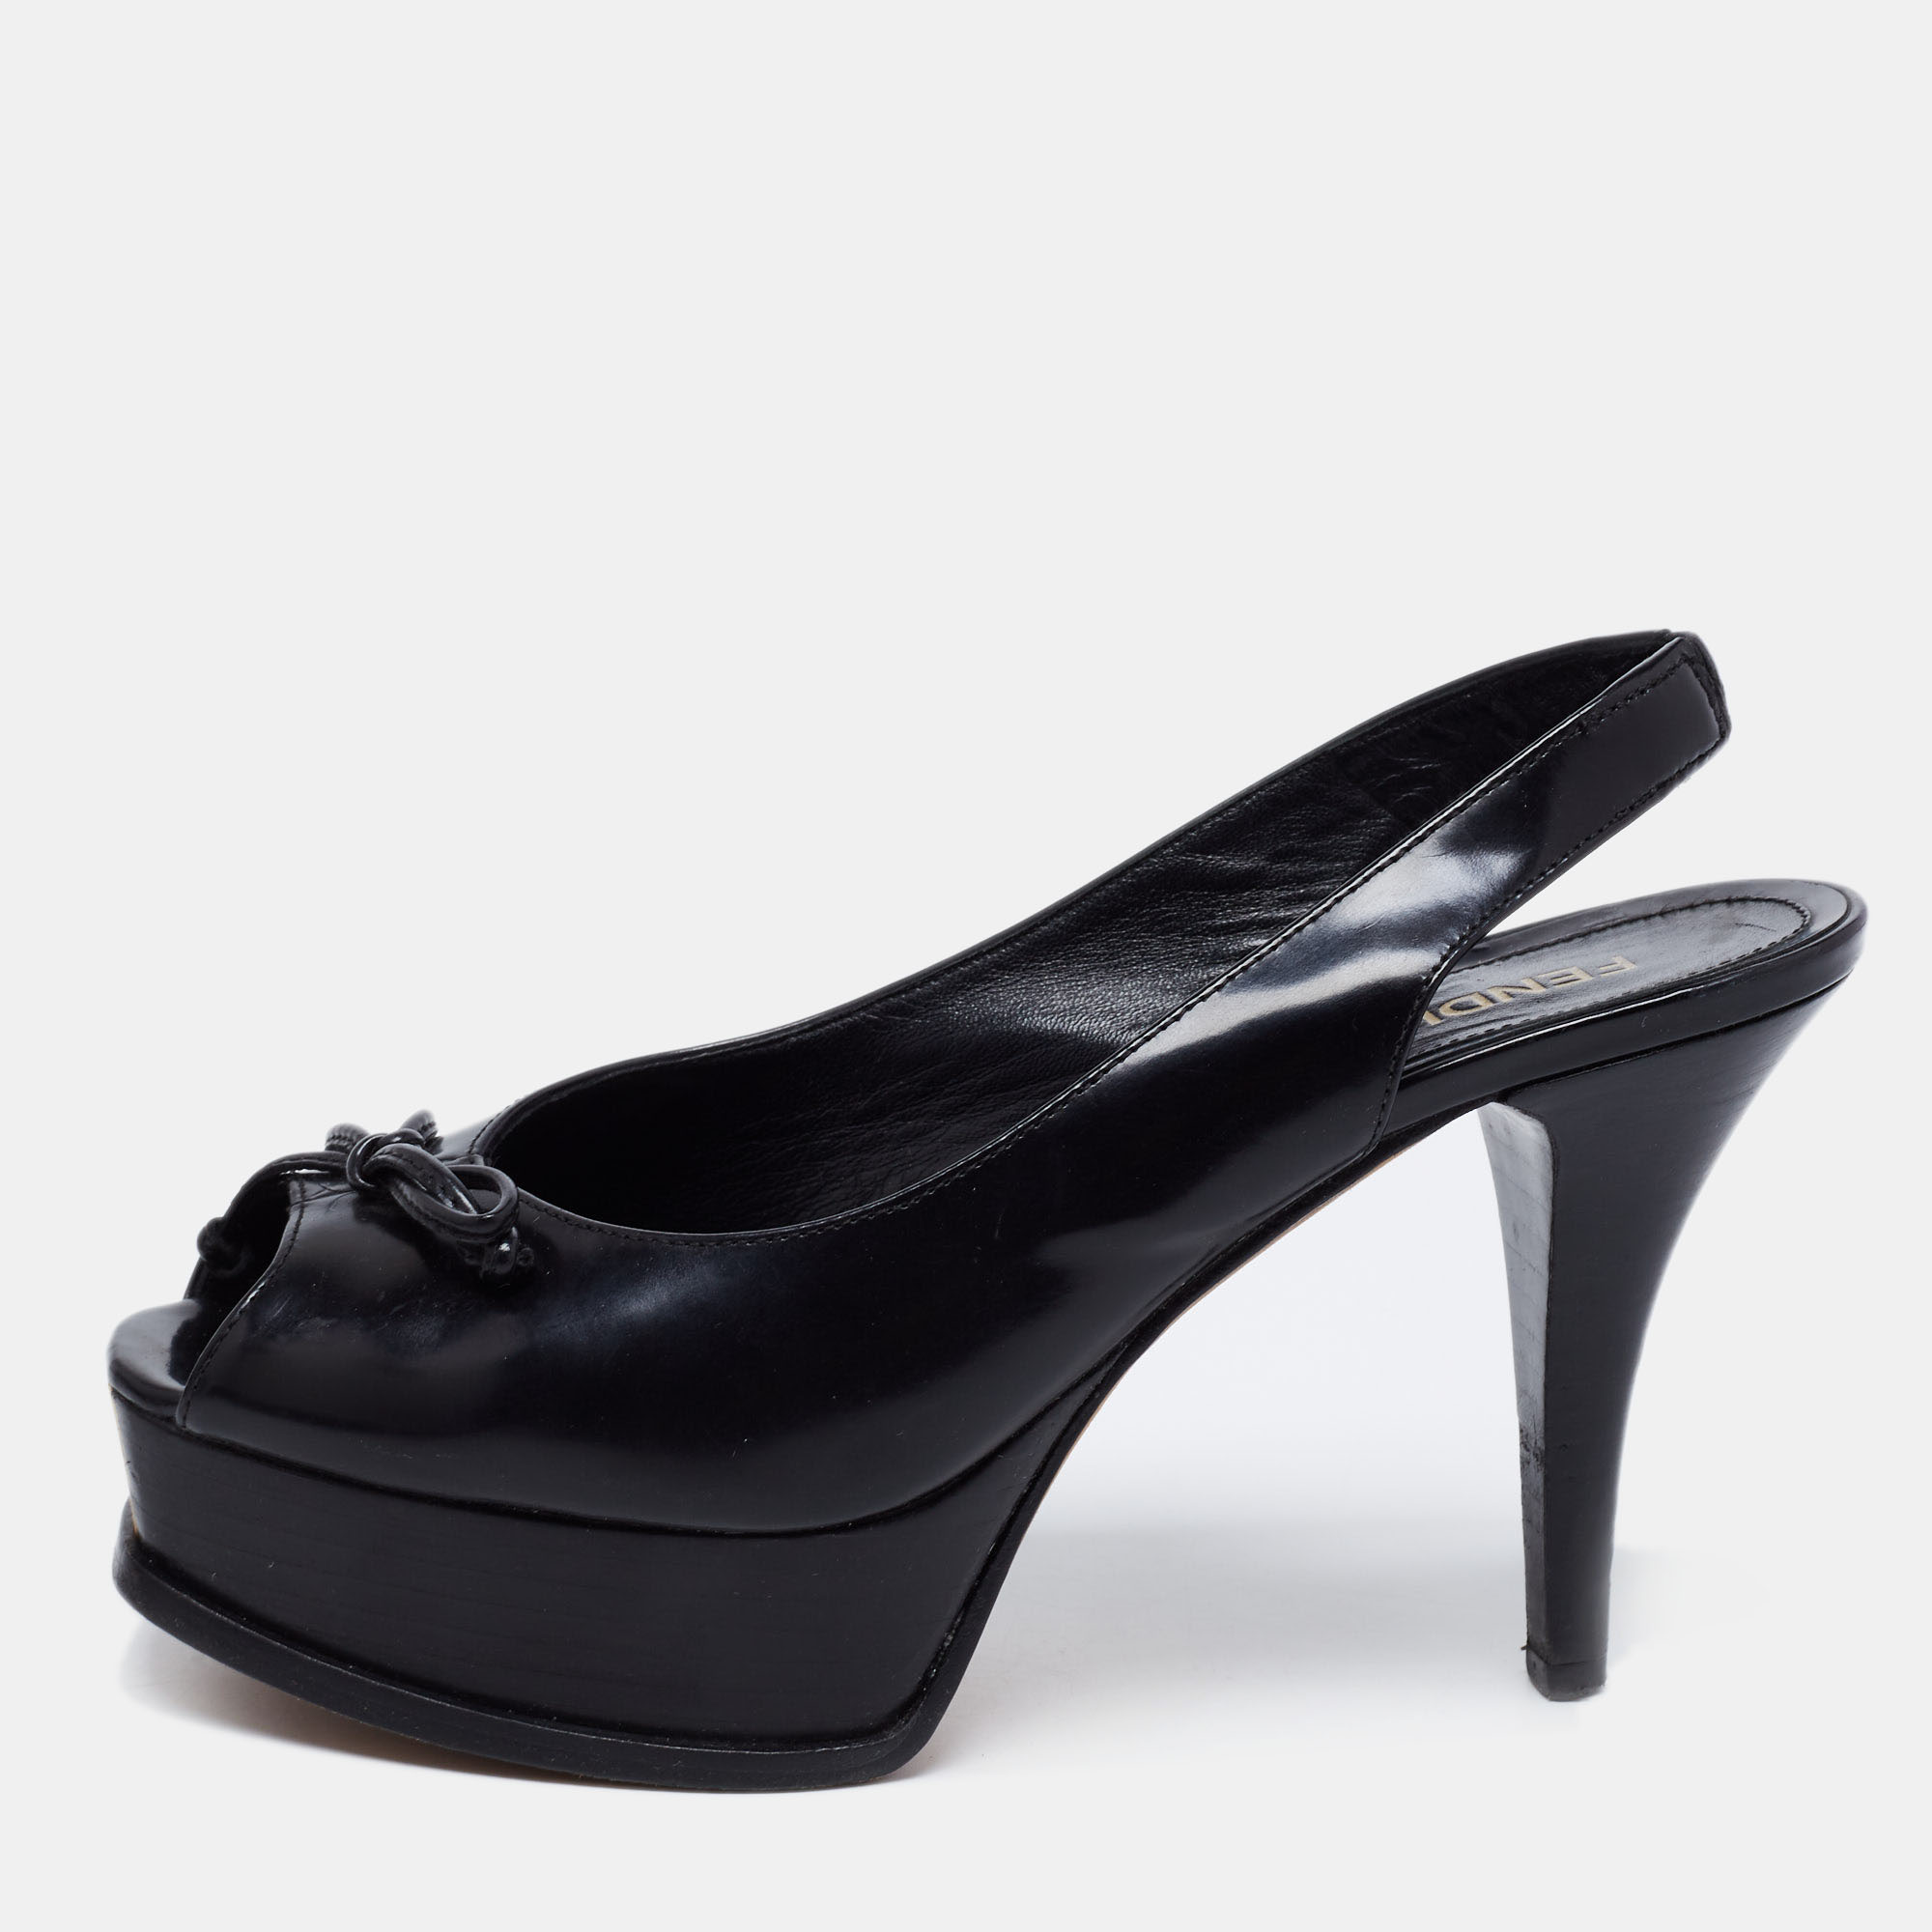 Fendi Black Patent Fendista Slingback Platform Sandals Size 37